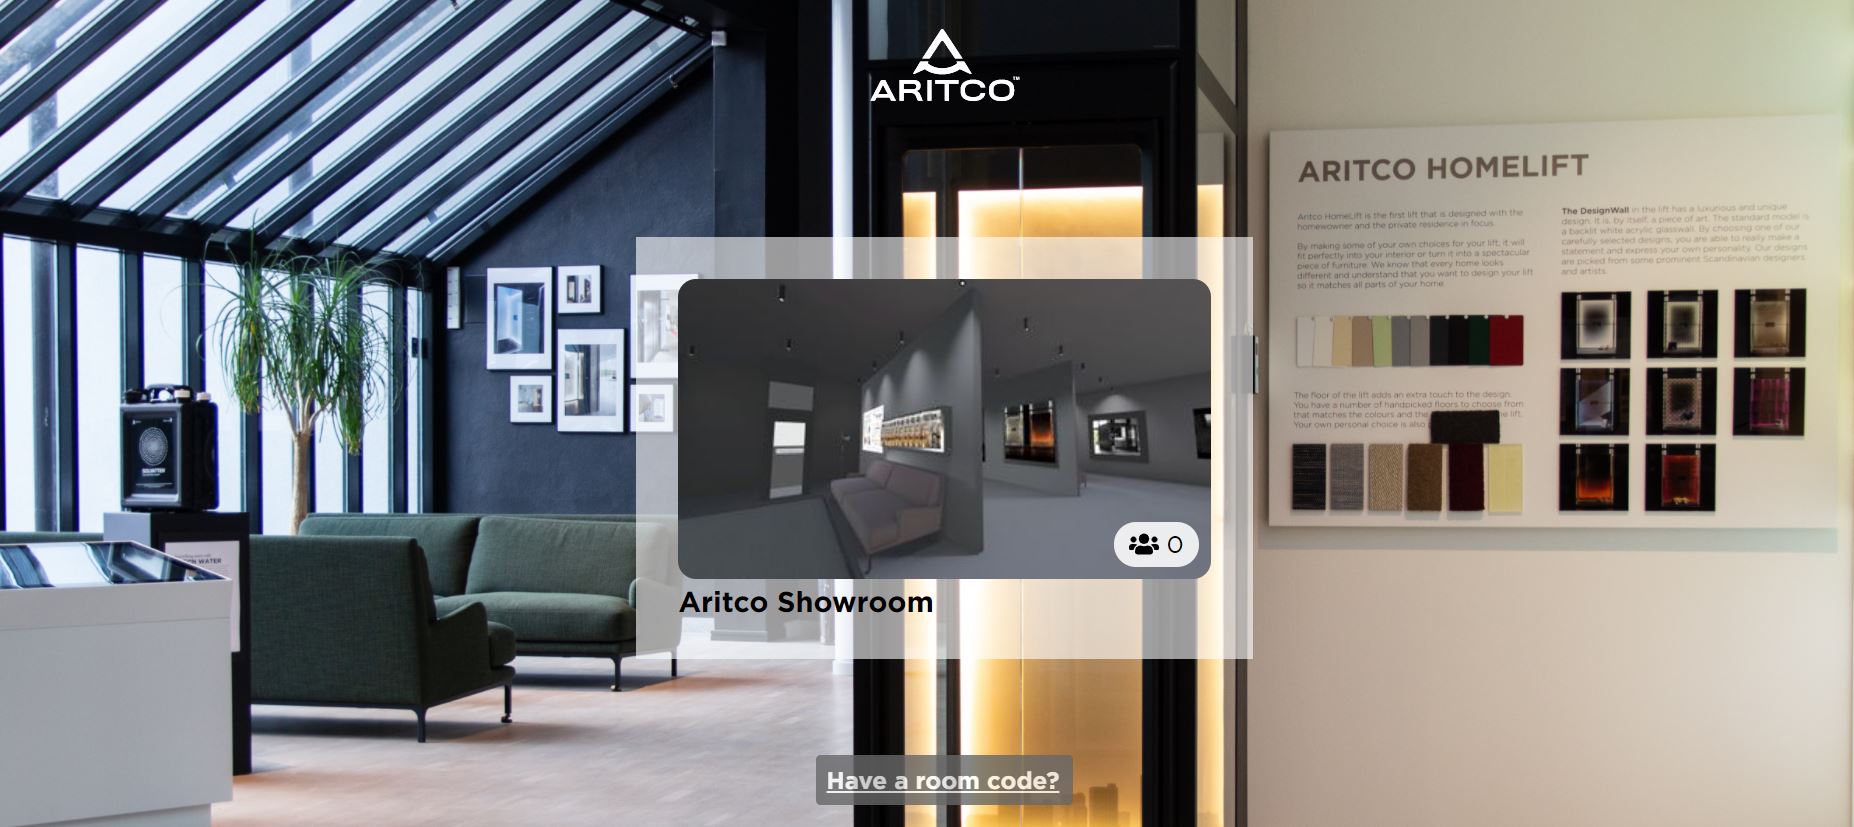 Entre to Aritco Virtual Showroom